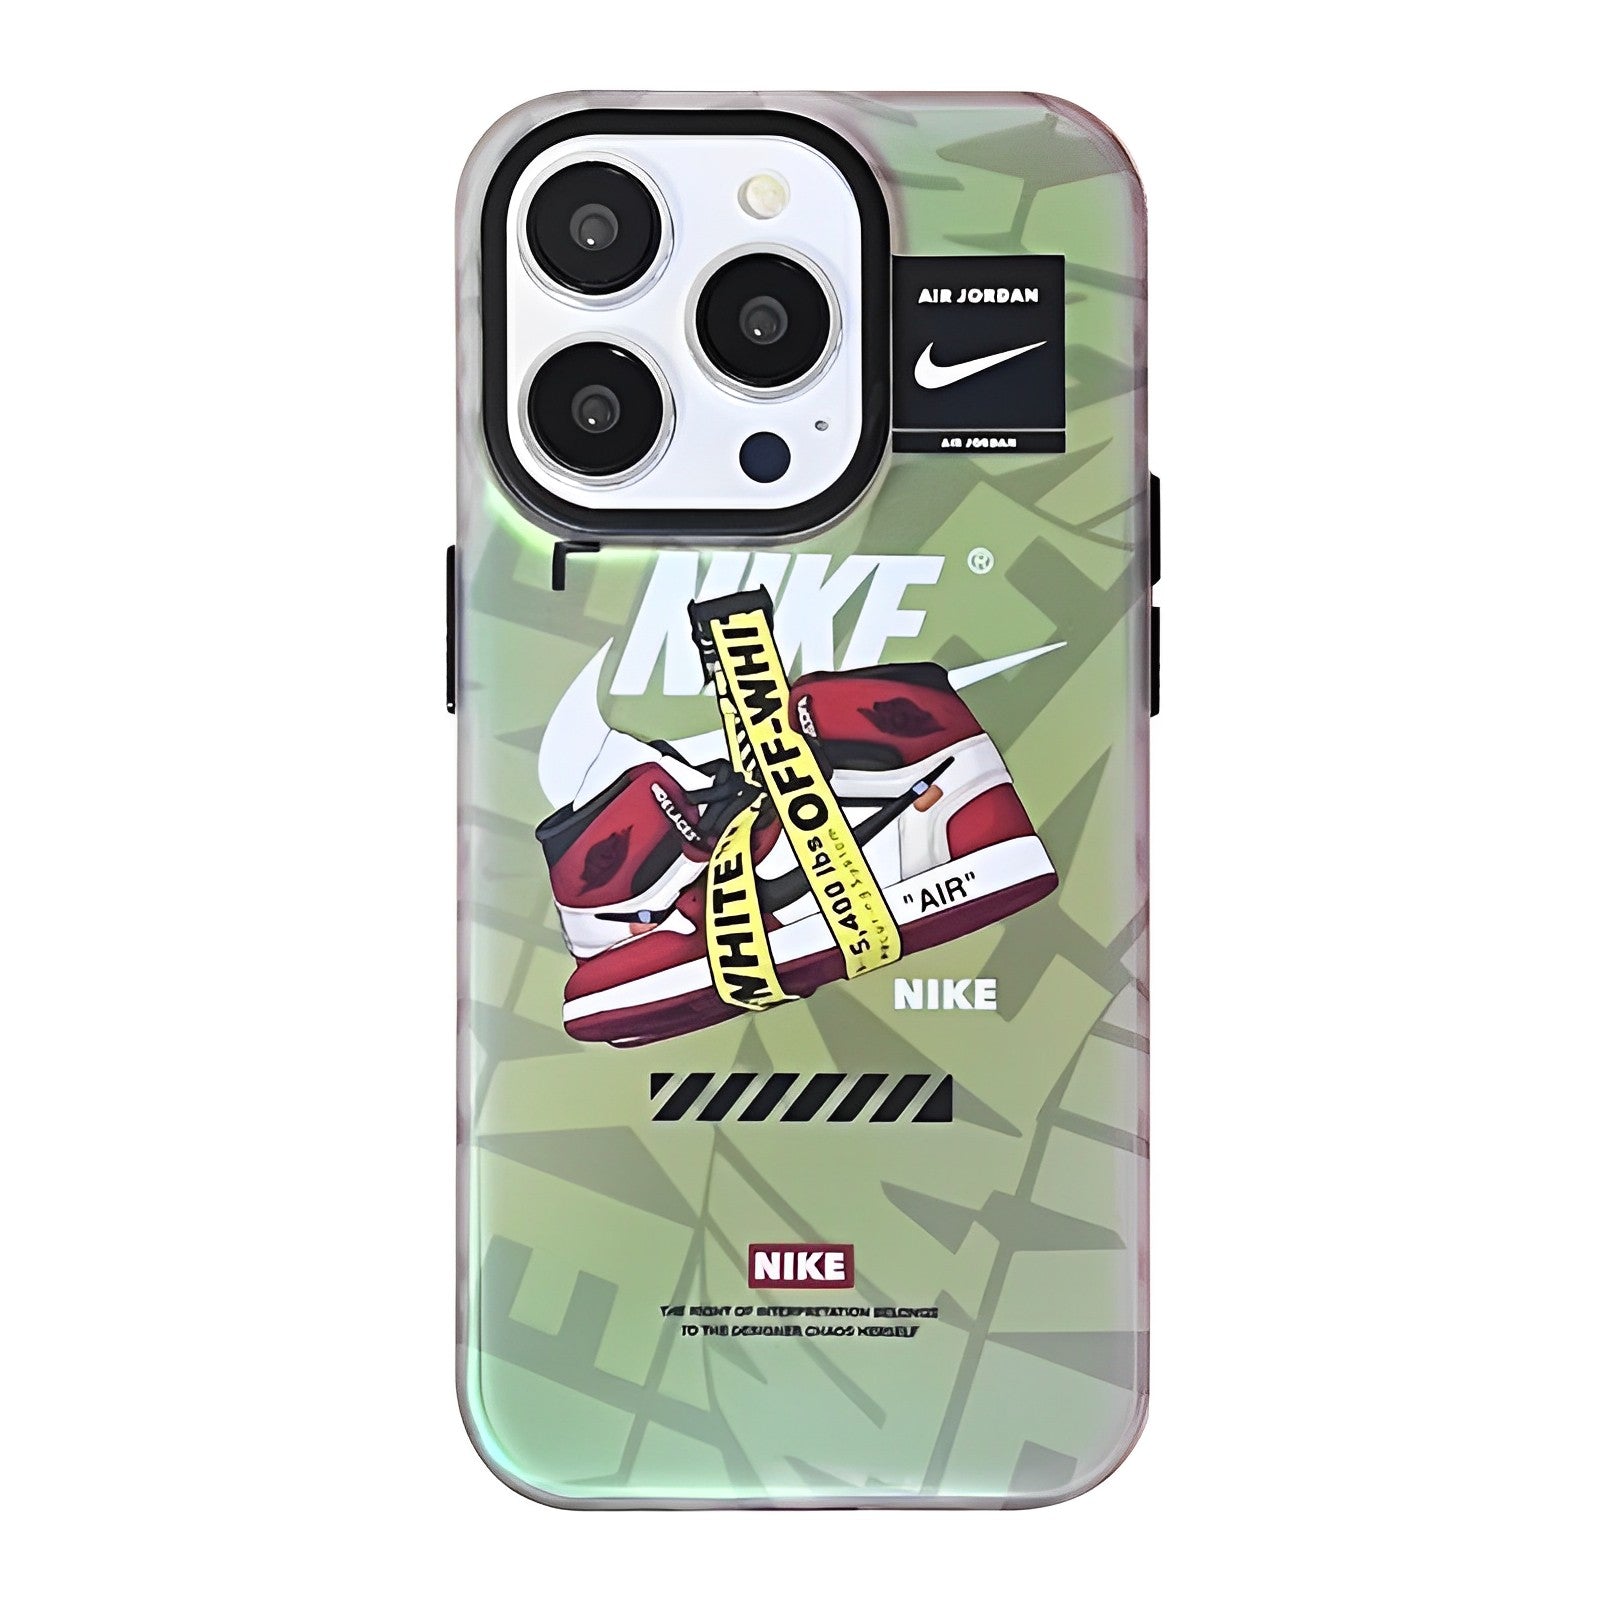 Laser AJ Nike iPhone Case